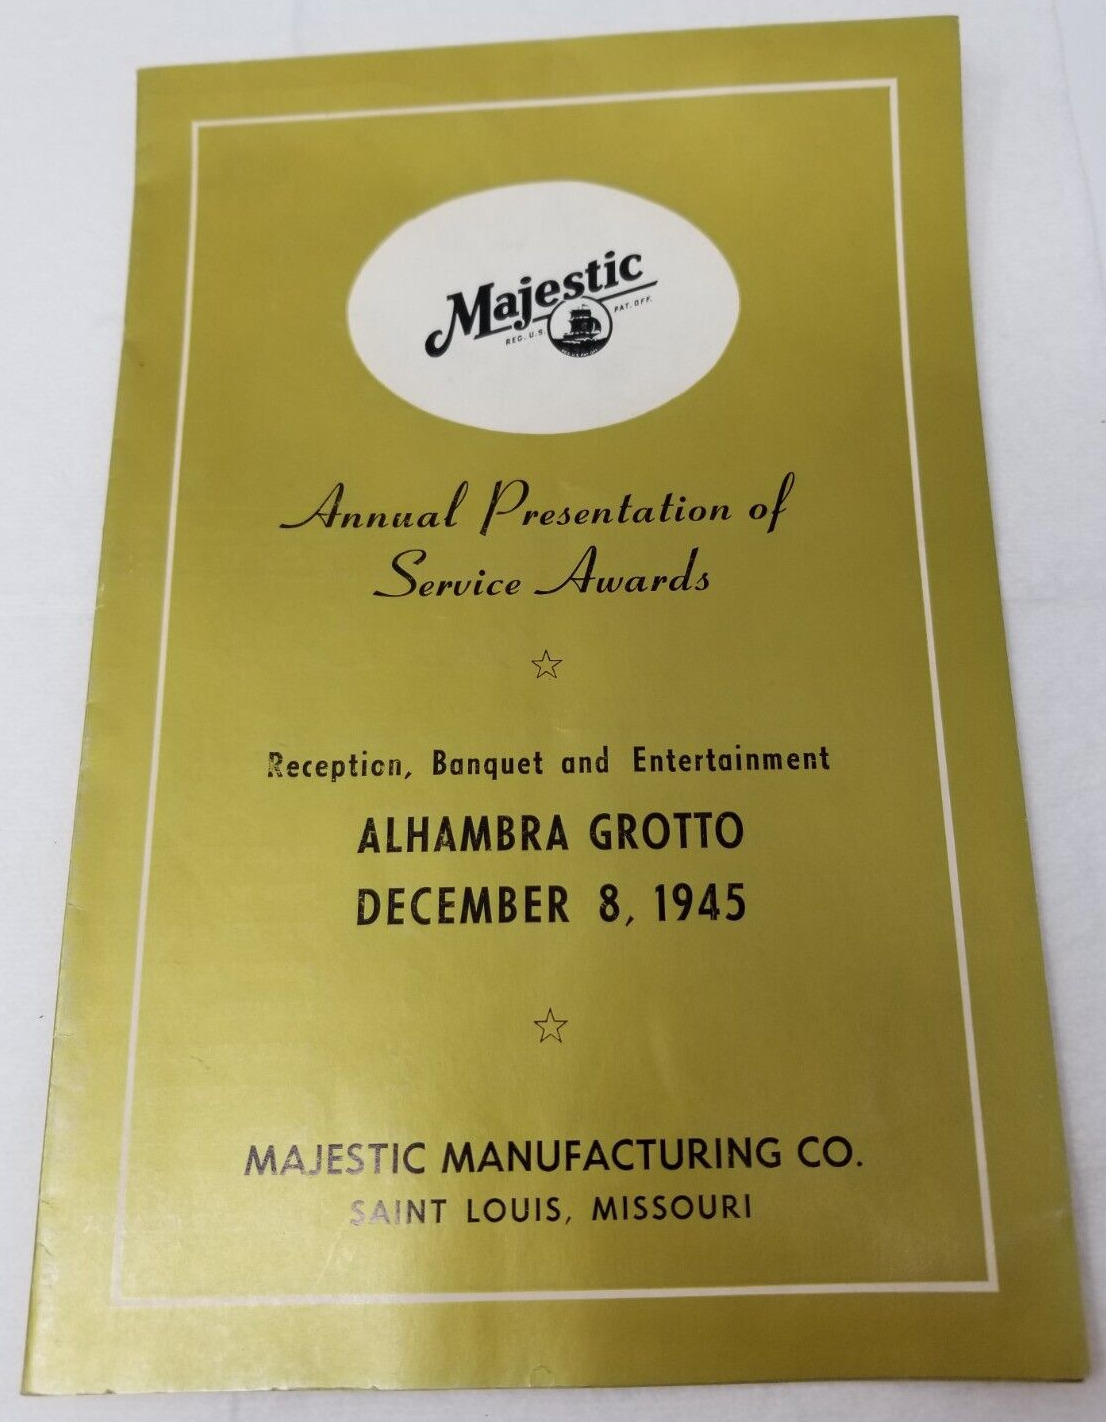 Majestic Manufacturing Oven Ranges 1945 Service Awards Program St. Louis